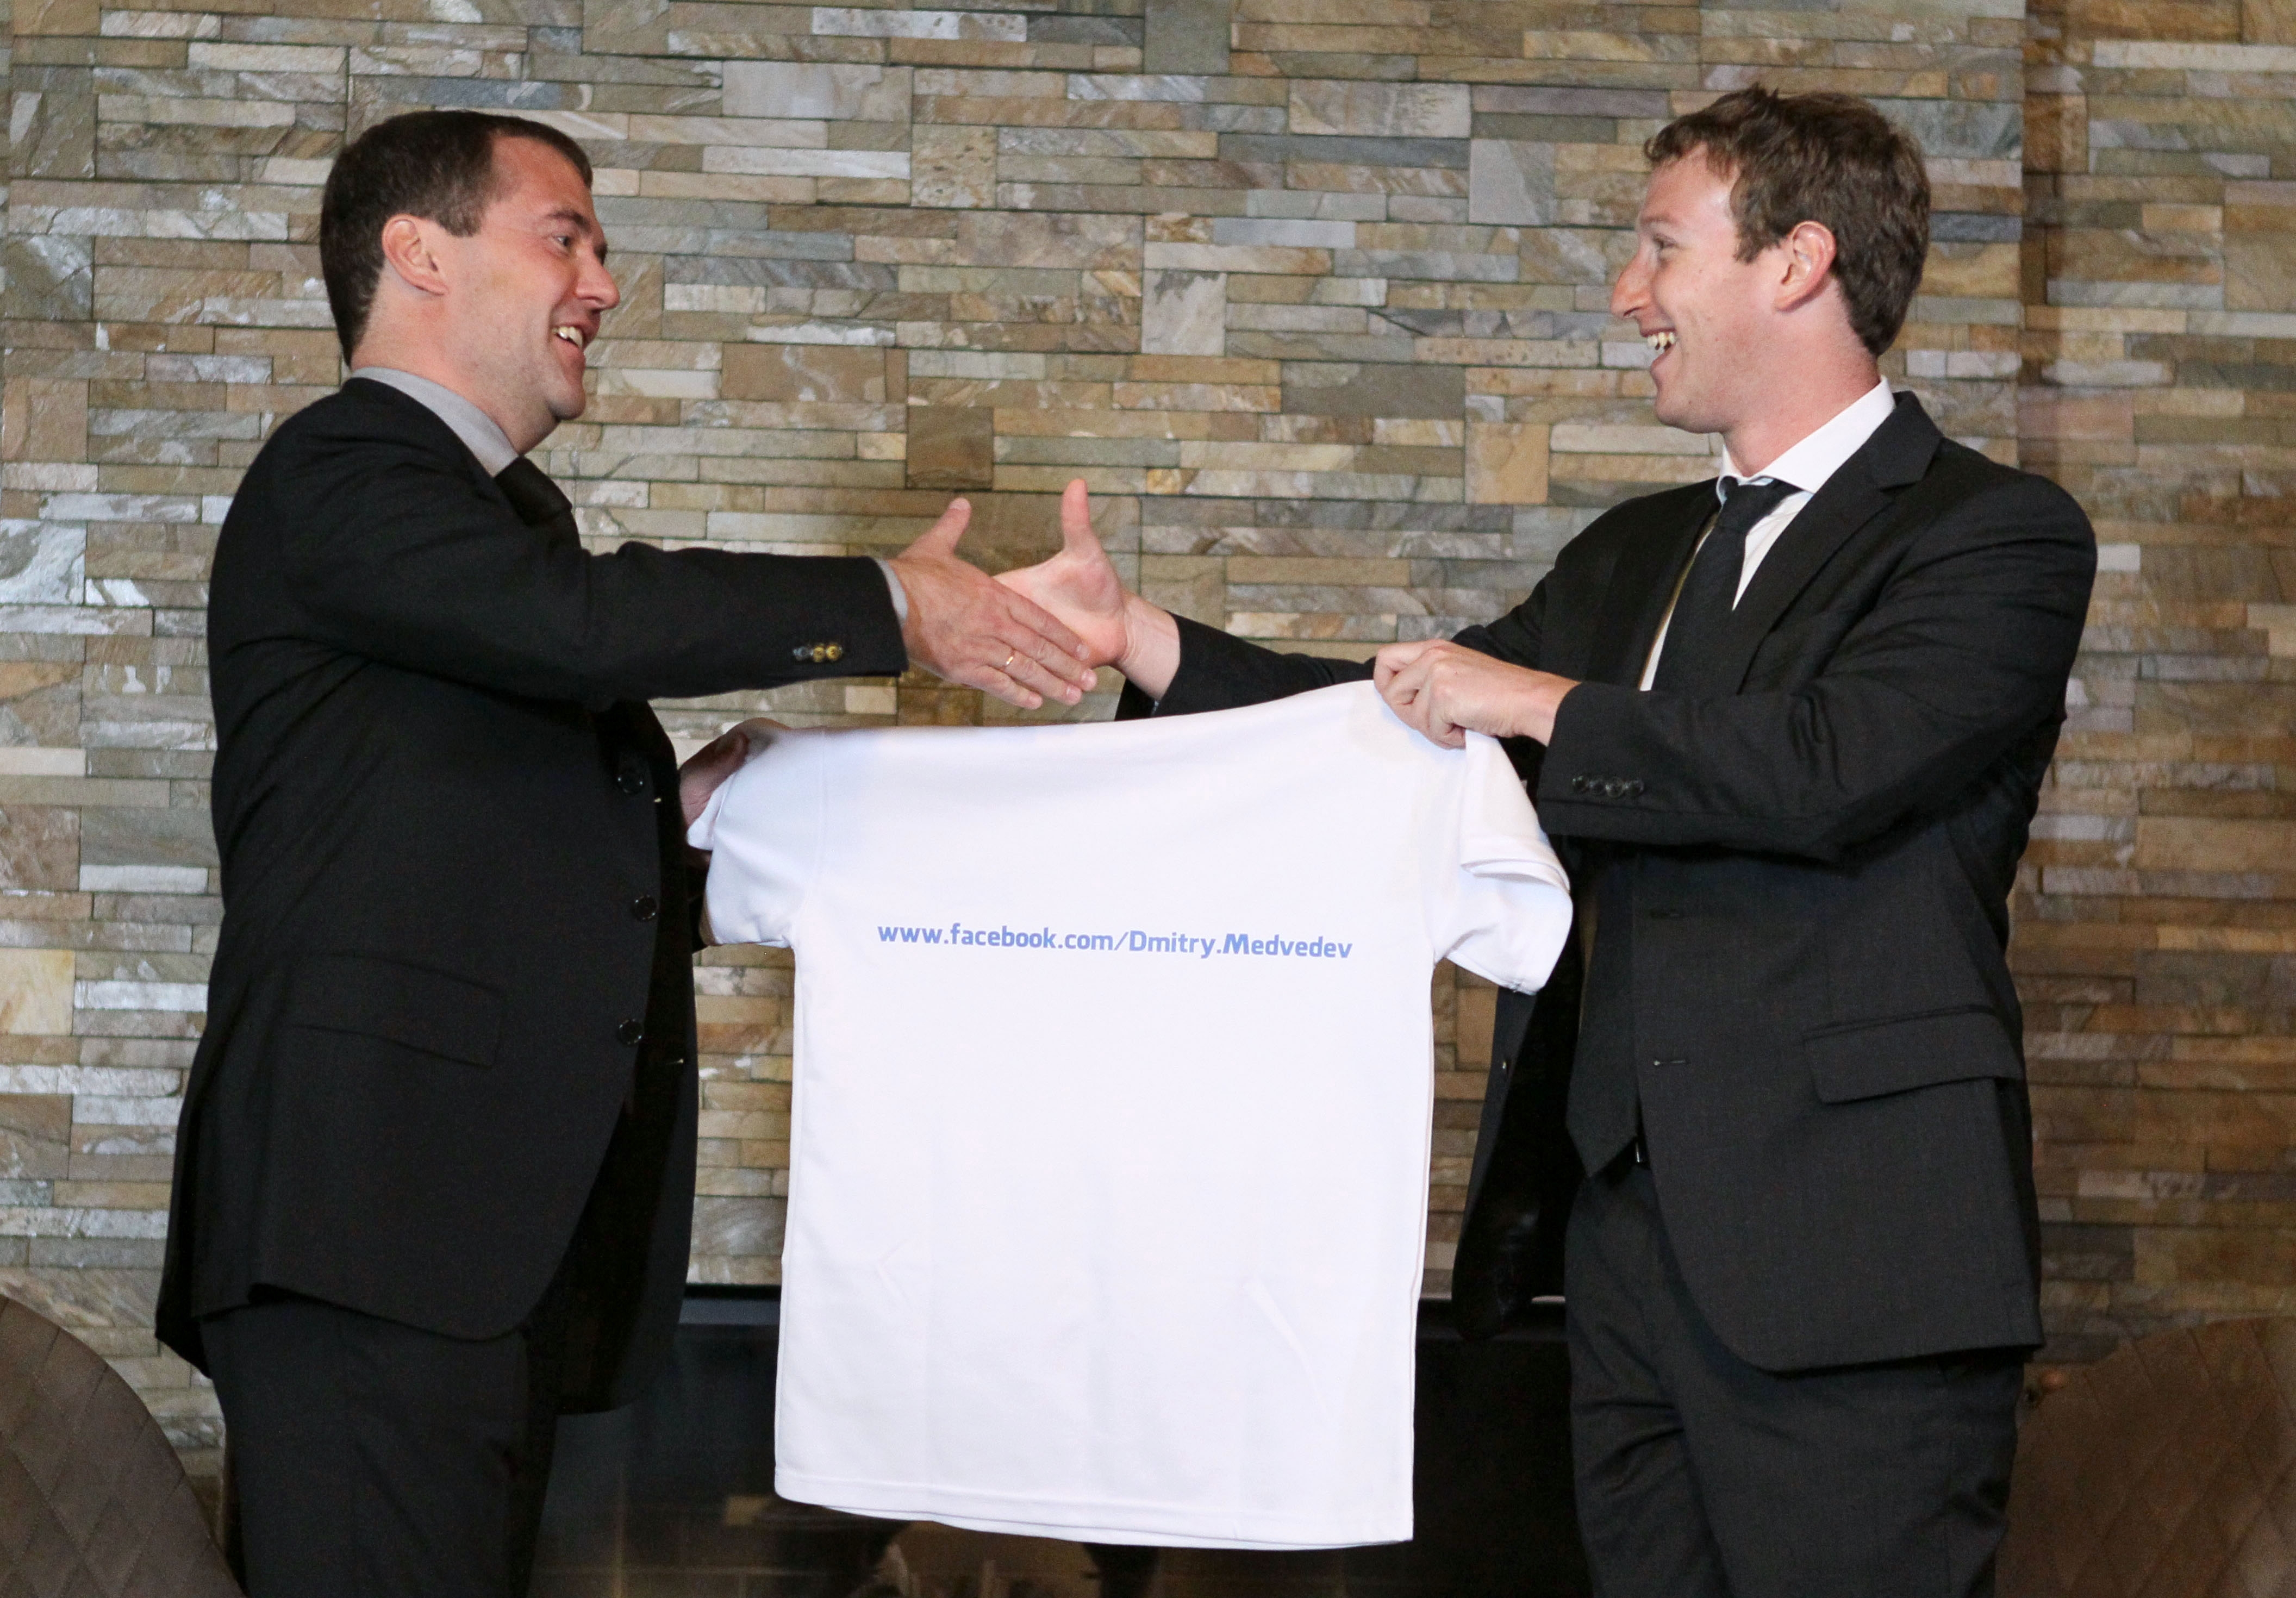 Mark Zuckerberg and Dmitry Medvedev 2012-10-01 1